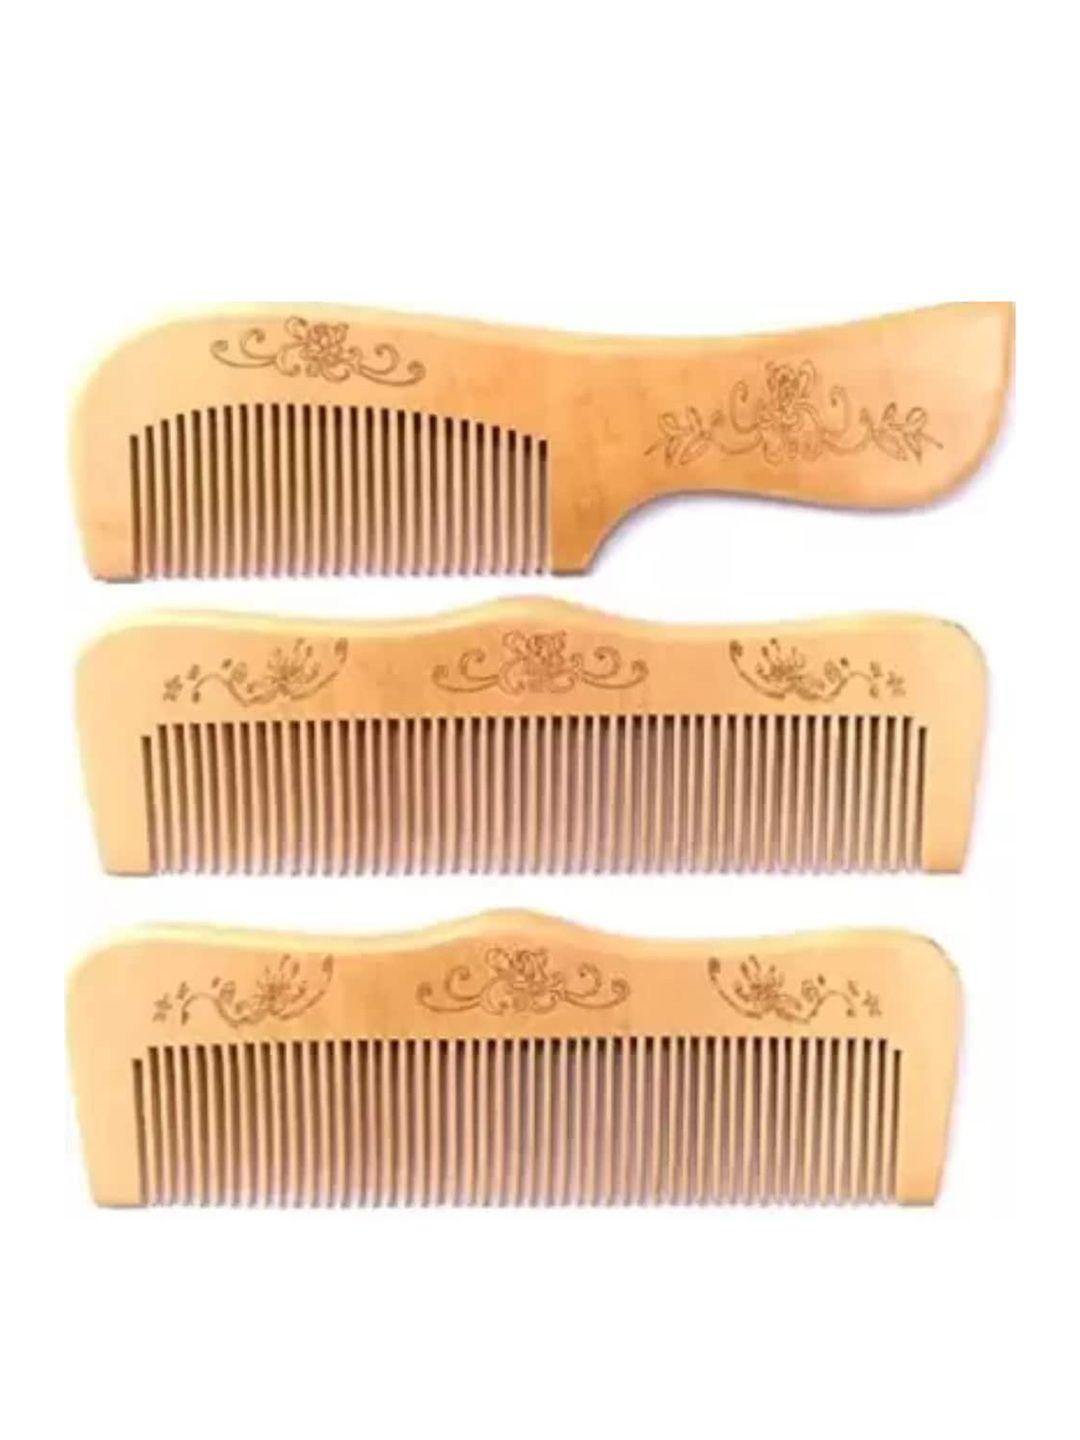 feelhigh set of 3 neem wood broad tooth anti-dandruff combs - brown